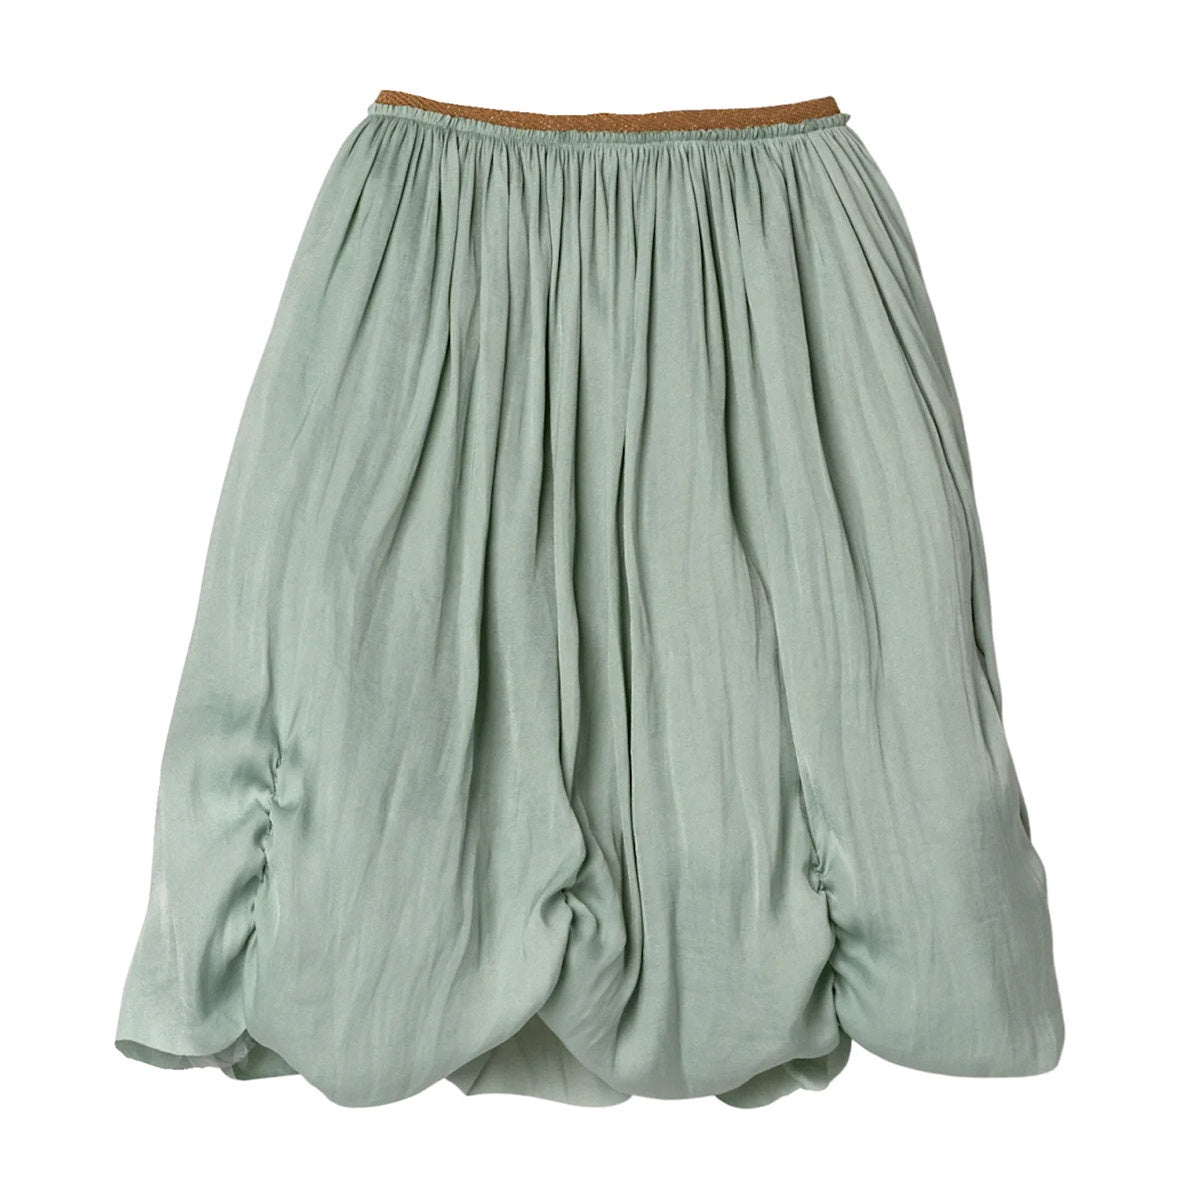 Maileg Princess Skirt, Mint (4-8 Years) (8537509593375)